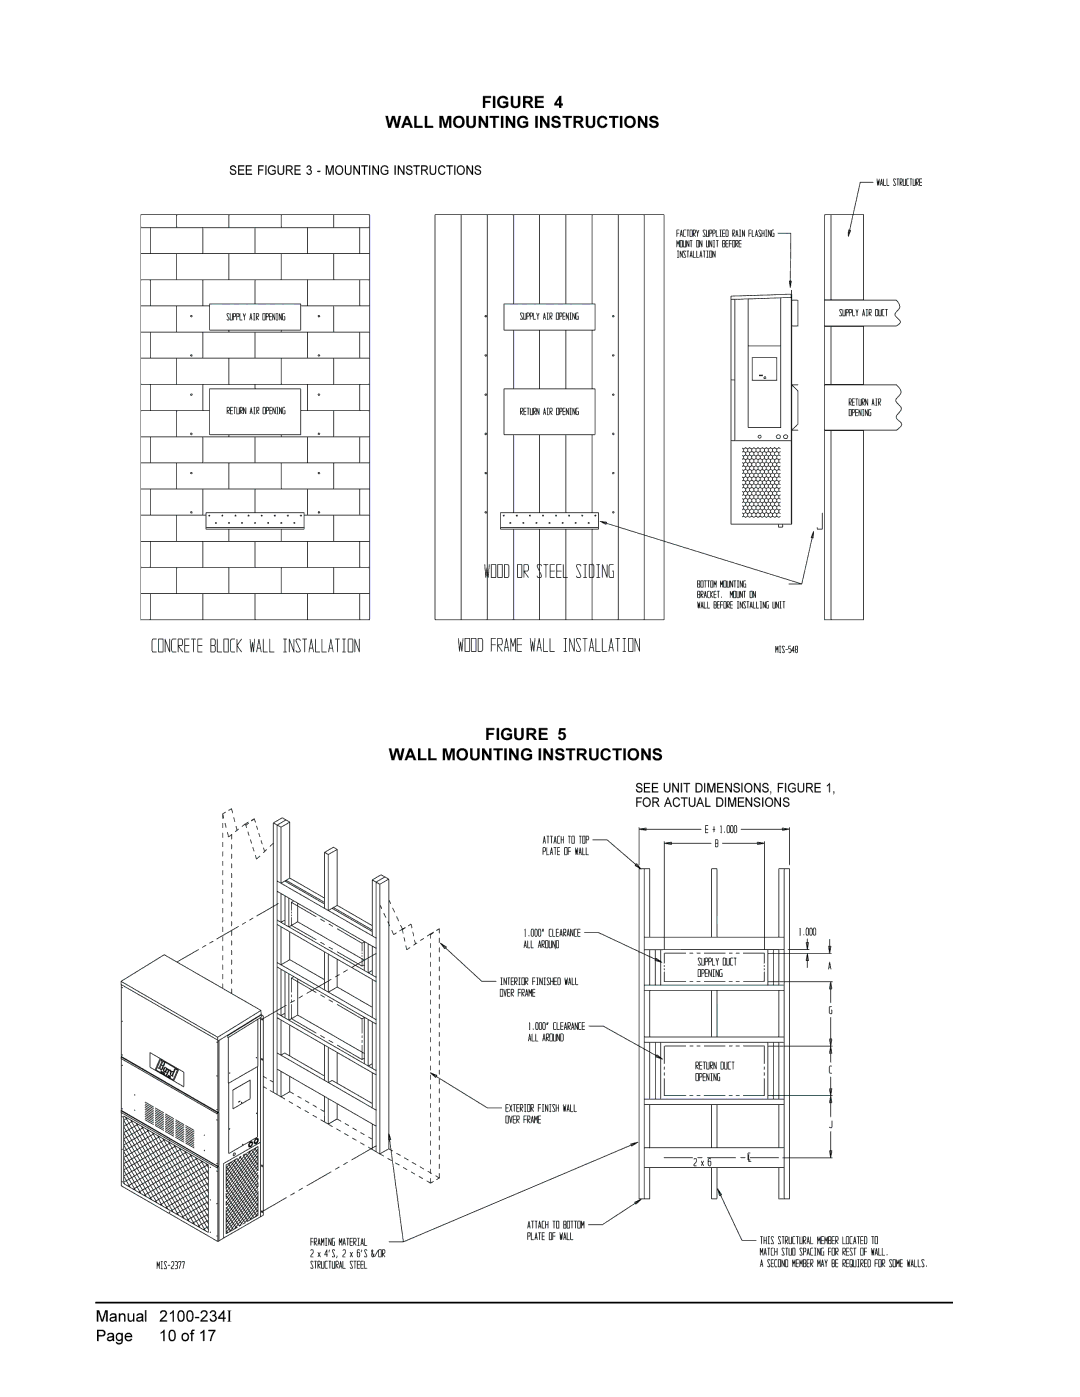 Bard WA121 installation instructions Wall Mounting Instructions 